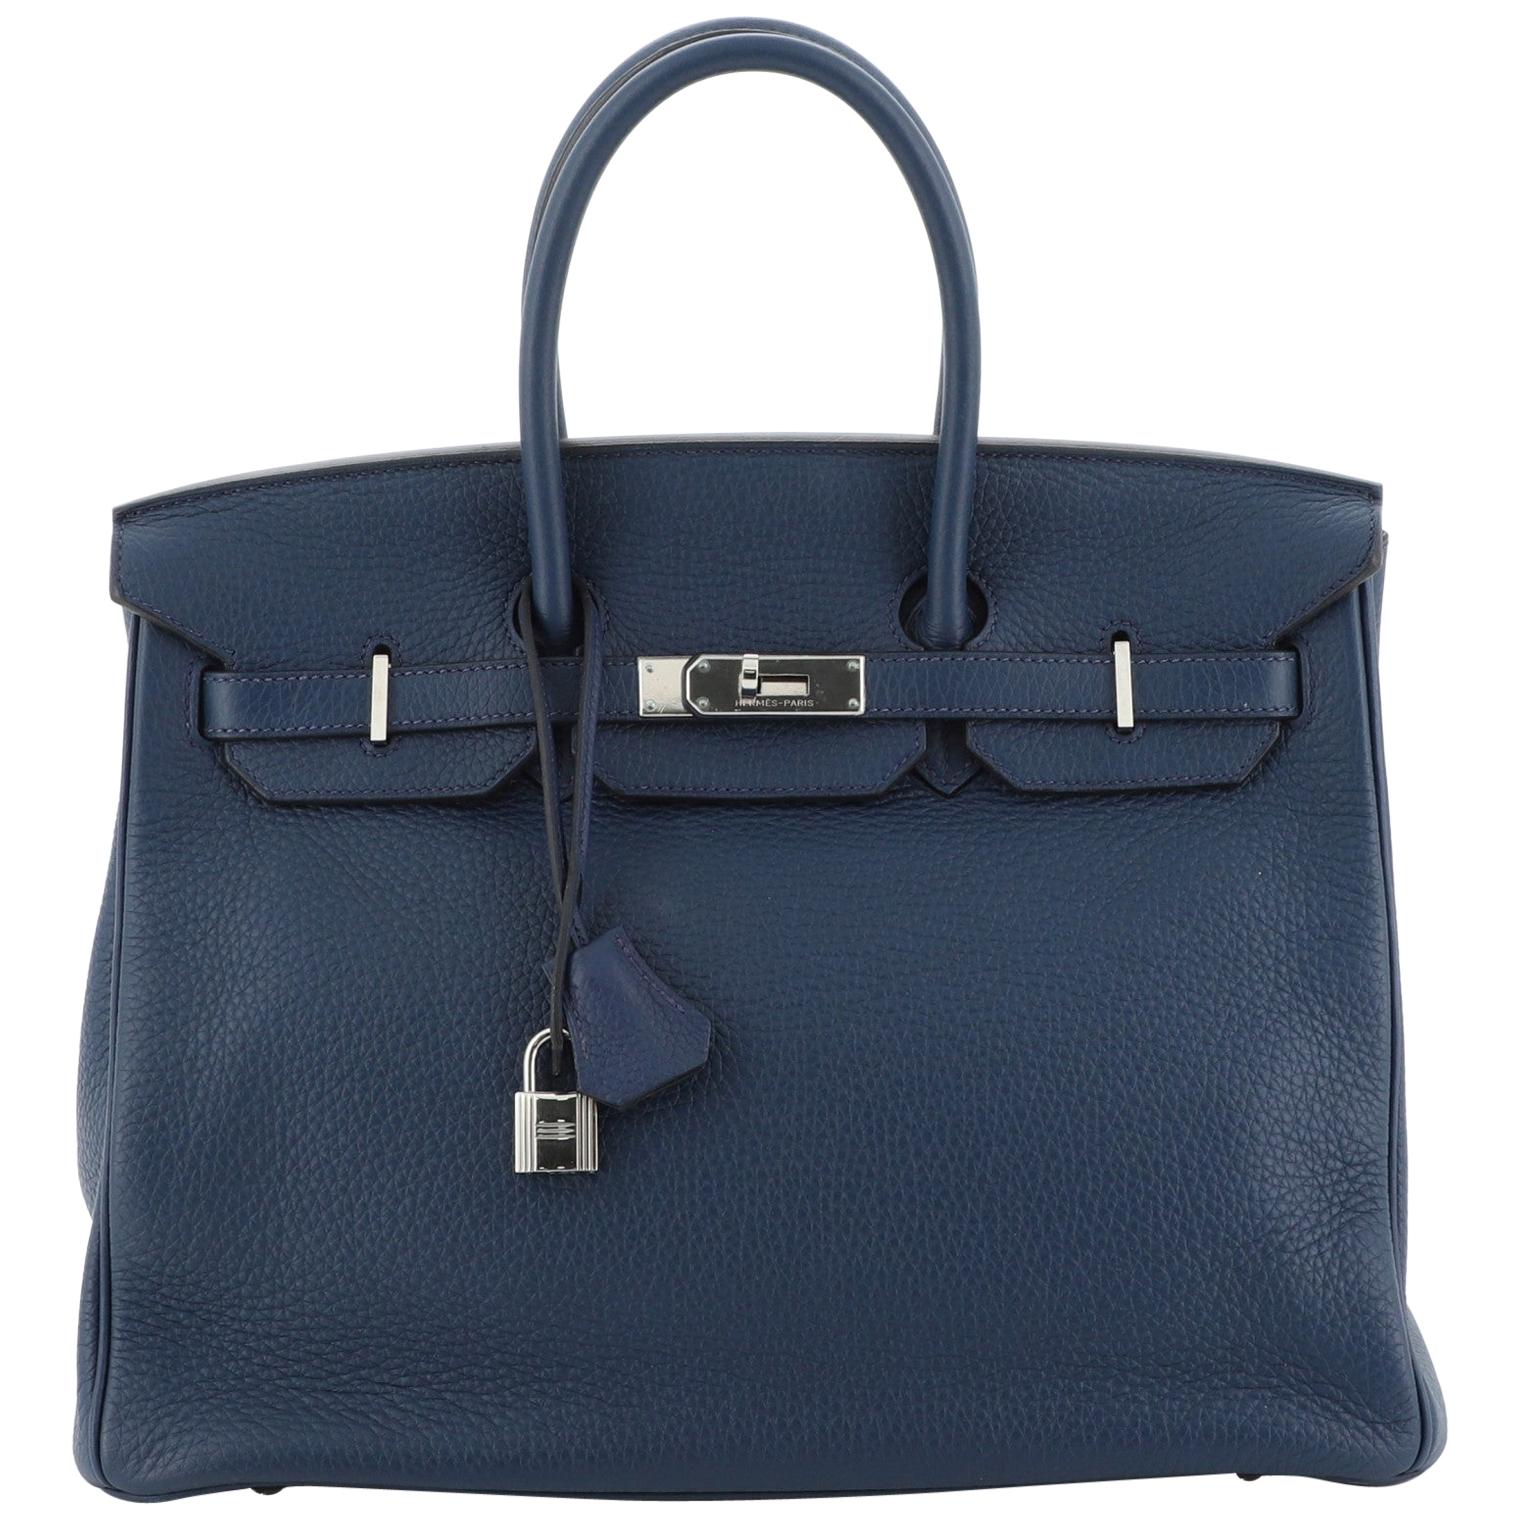 Hermes Birkin Handbag Bleu de Malte Clemence with Palladium Hardware 35